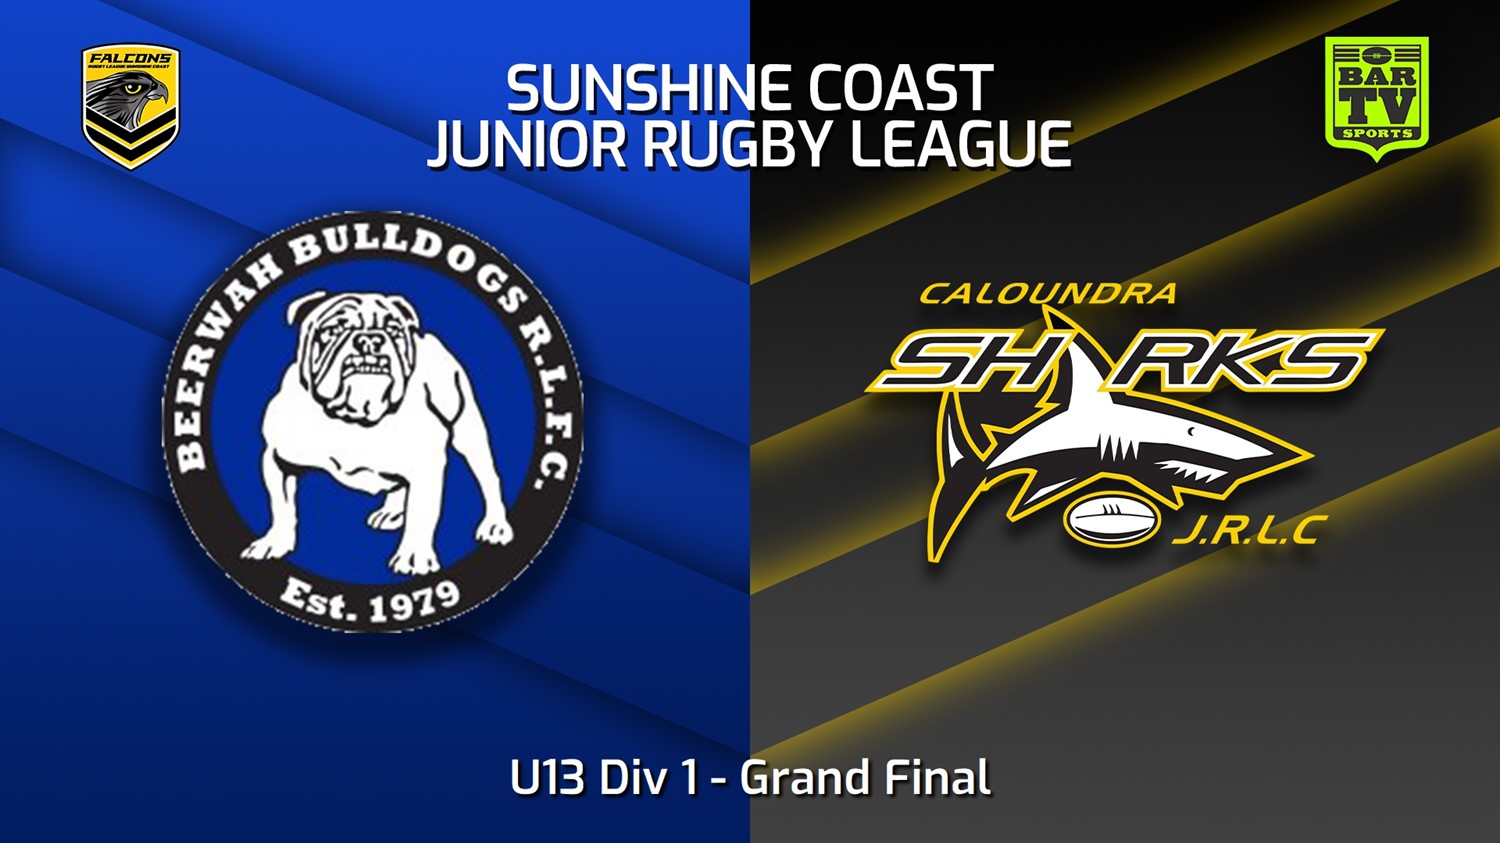 230902-Sunshine Coast Junior Rugby League Grand Final - U13 Div 1 - Beerwah Bulldogs JRL v Caloundra Sharks JRL Slate Image